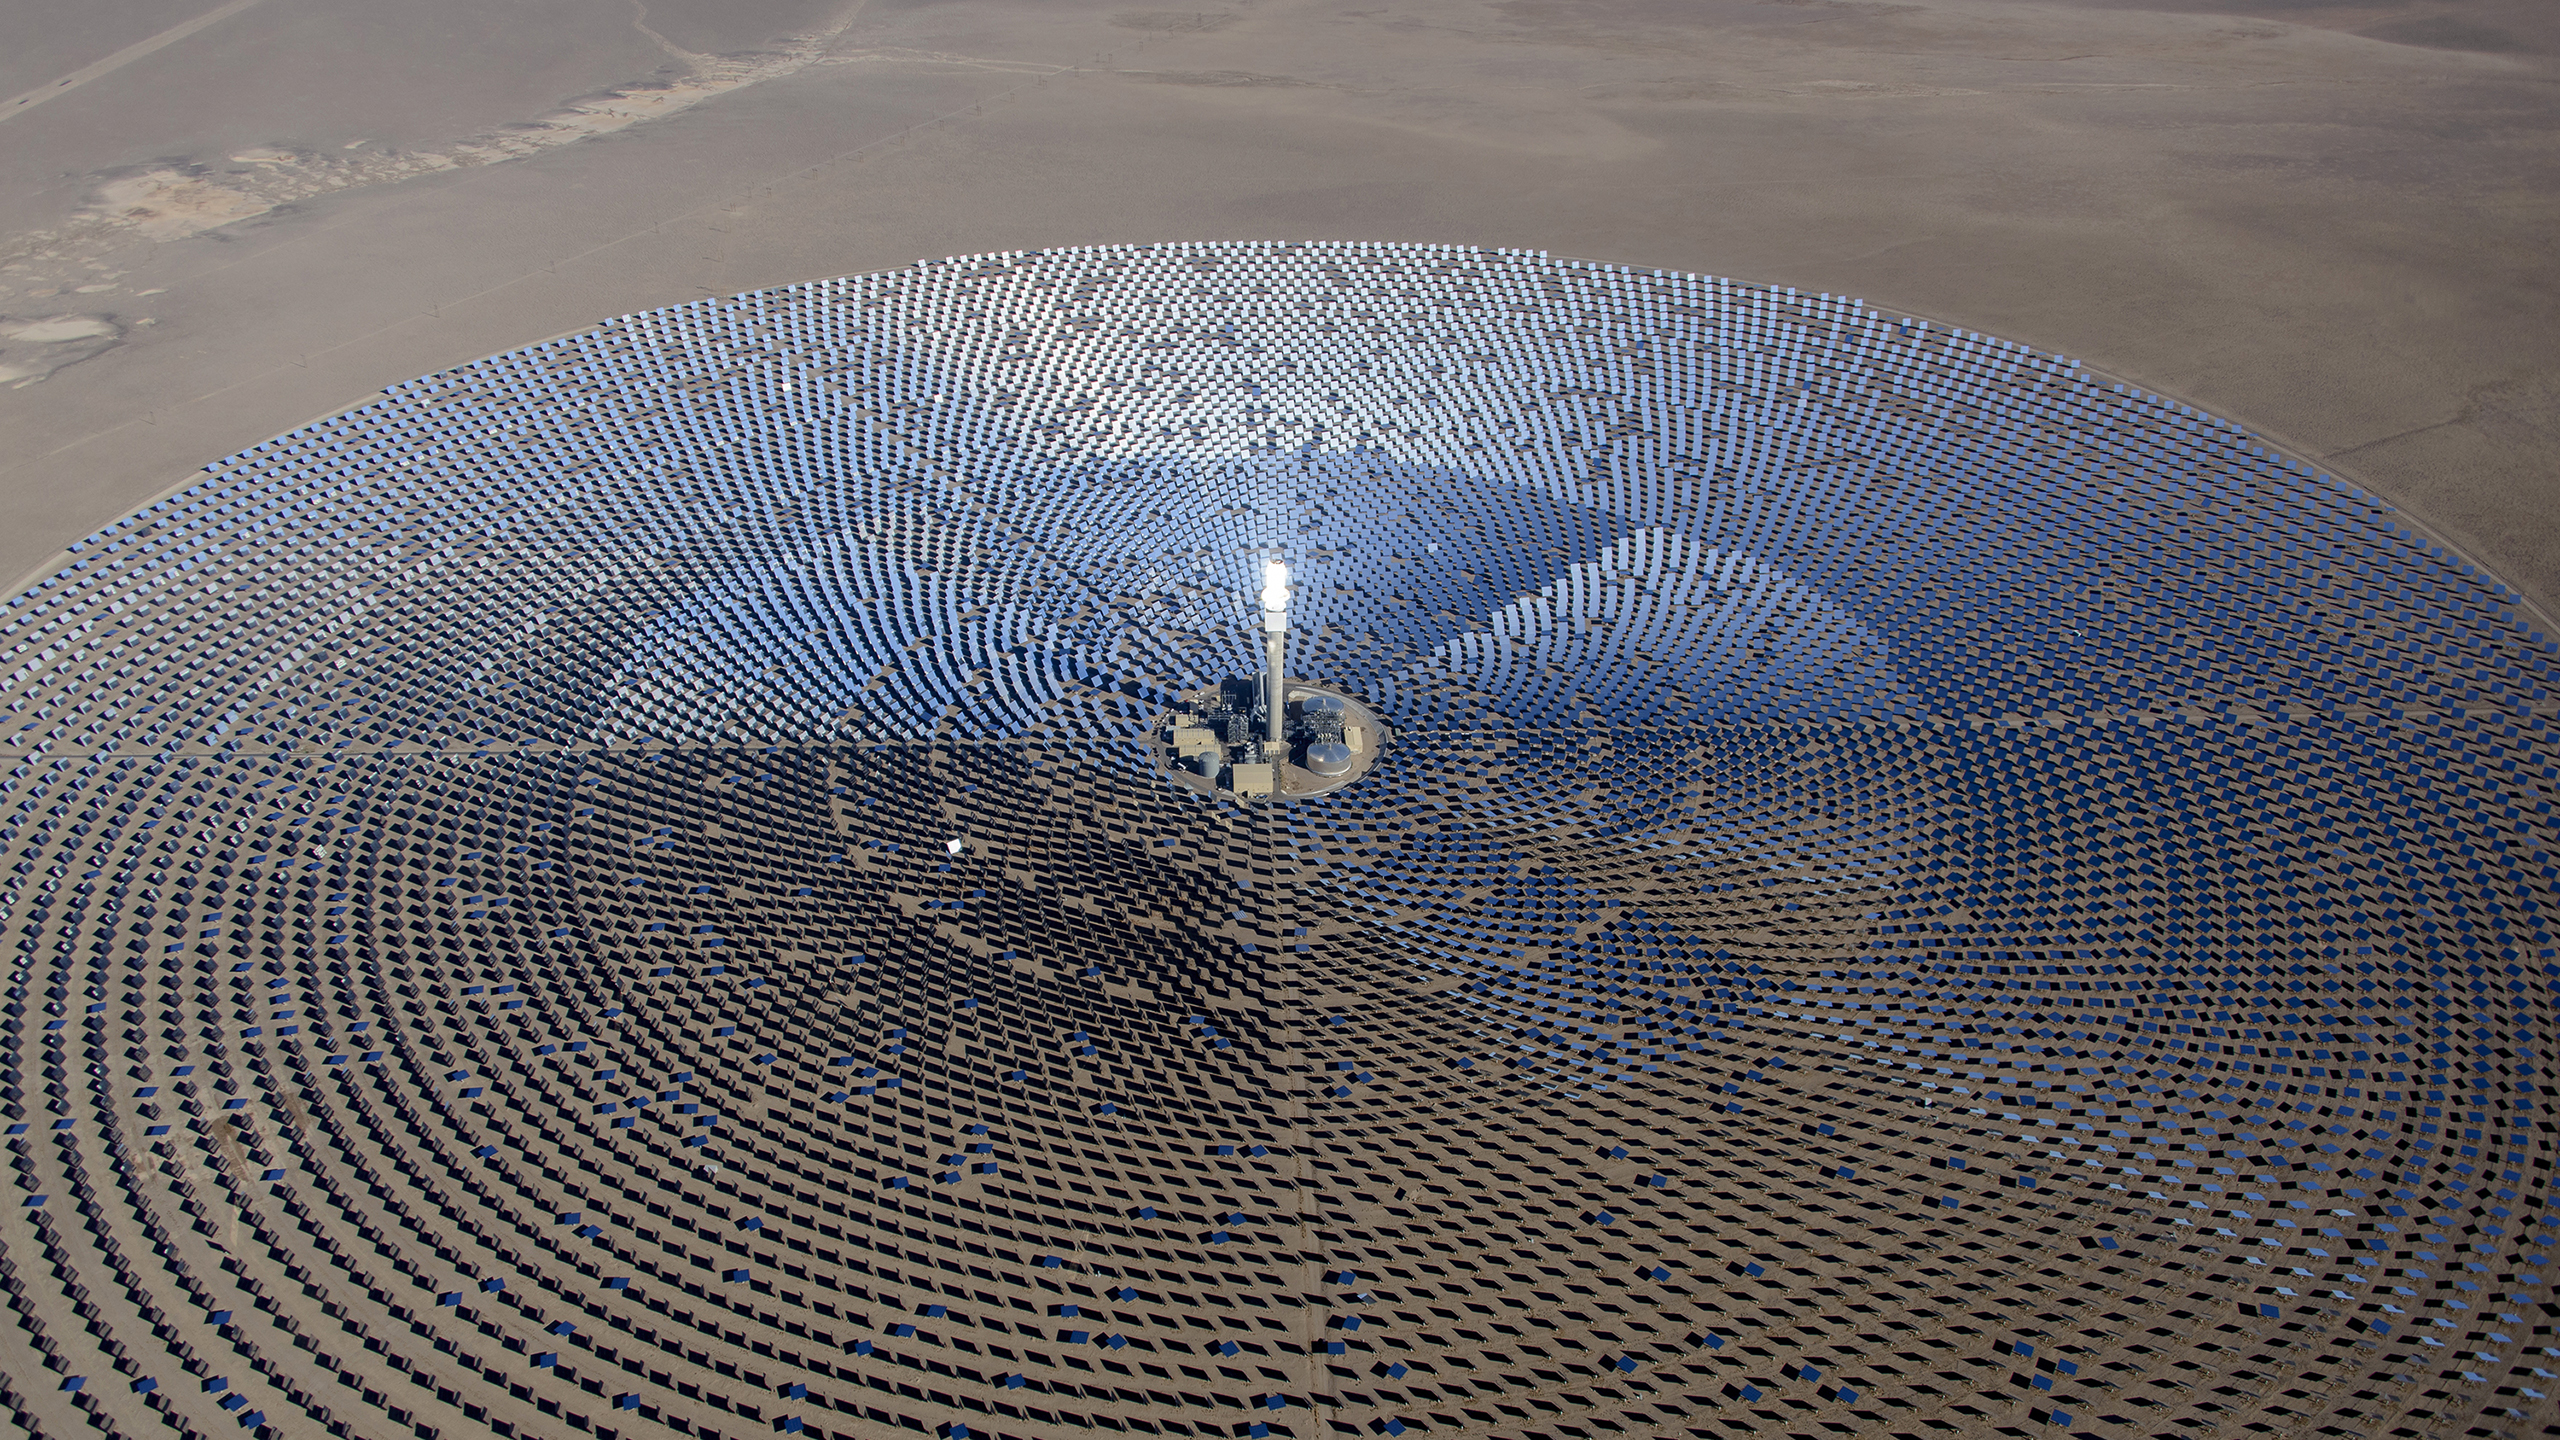 General 2560x1440 solar power power plant technology desert aerial view mirror